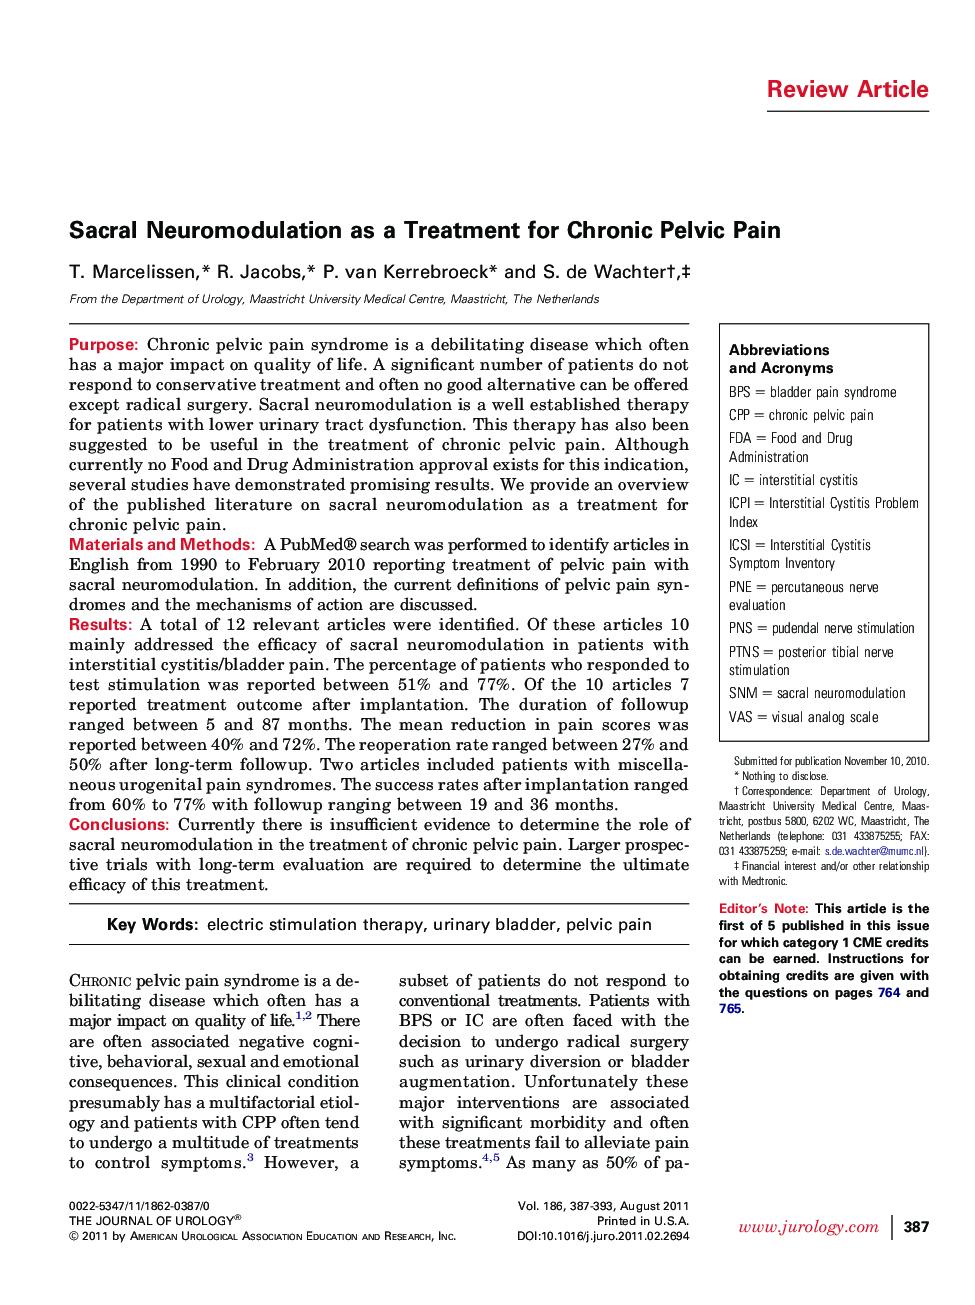 Sacral Neuromodulation as a Treatment for Chronic Pelvic Pain